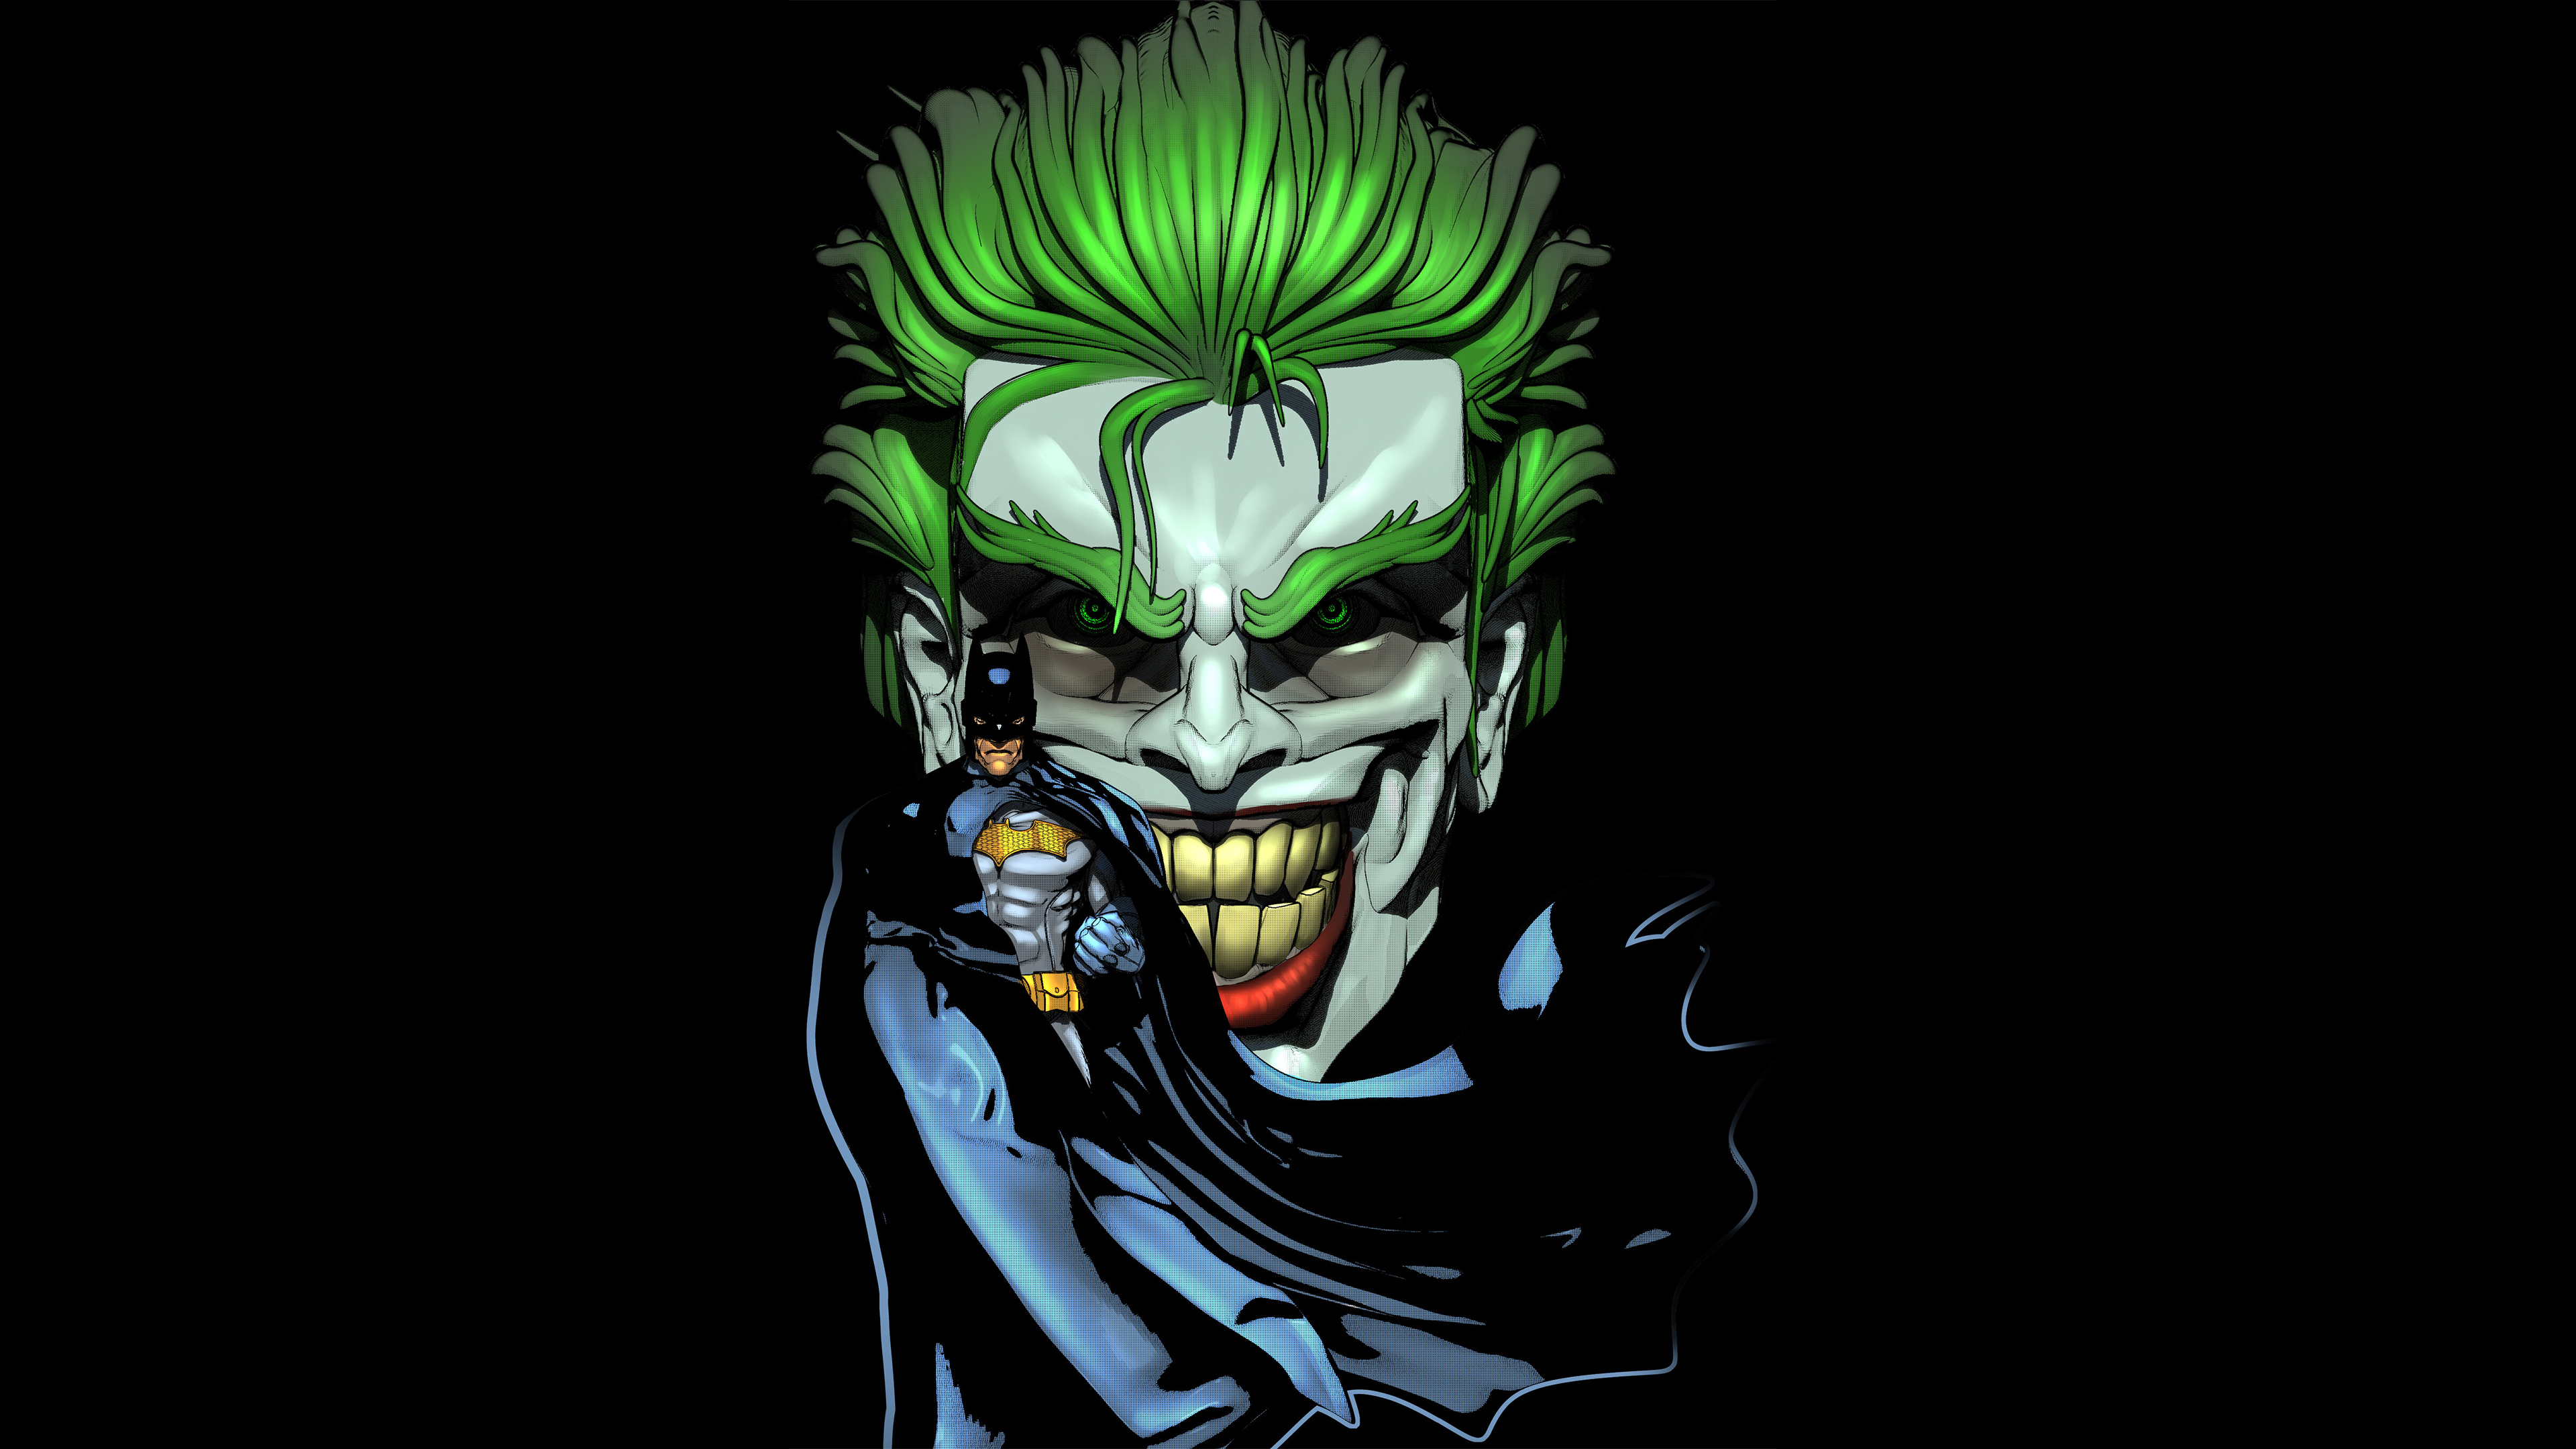 Joker and Batman DC Comic Wallpaper, HD Superheroes 4K Wallpapers, Images,  Photos and Background - Wallpapers Den